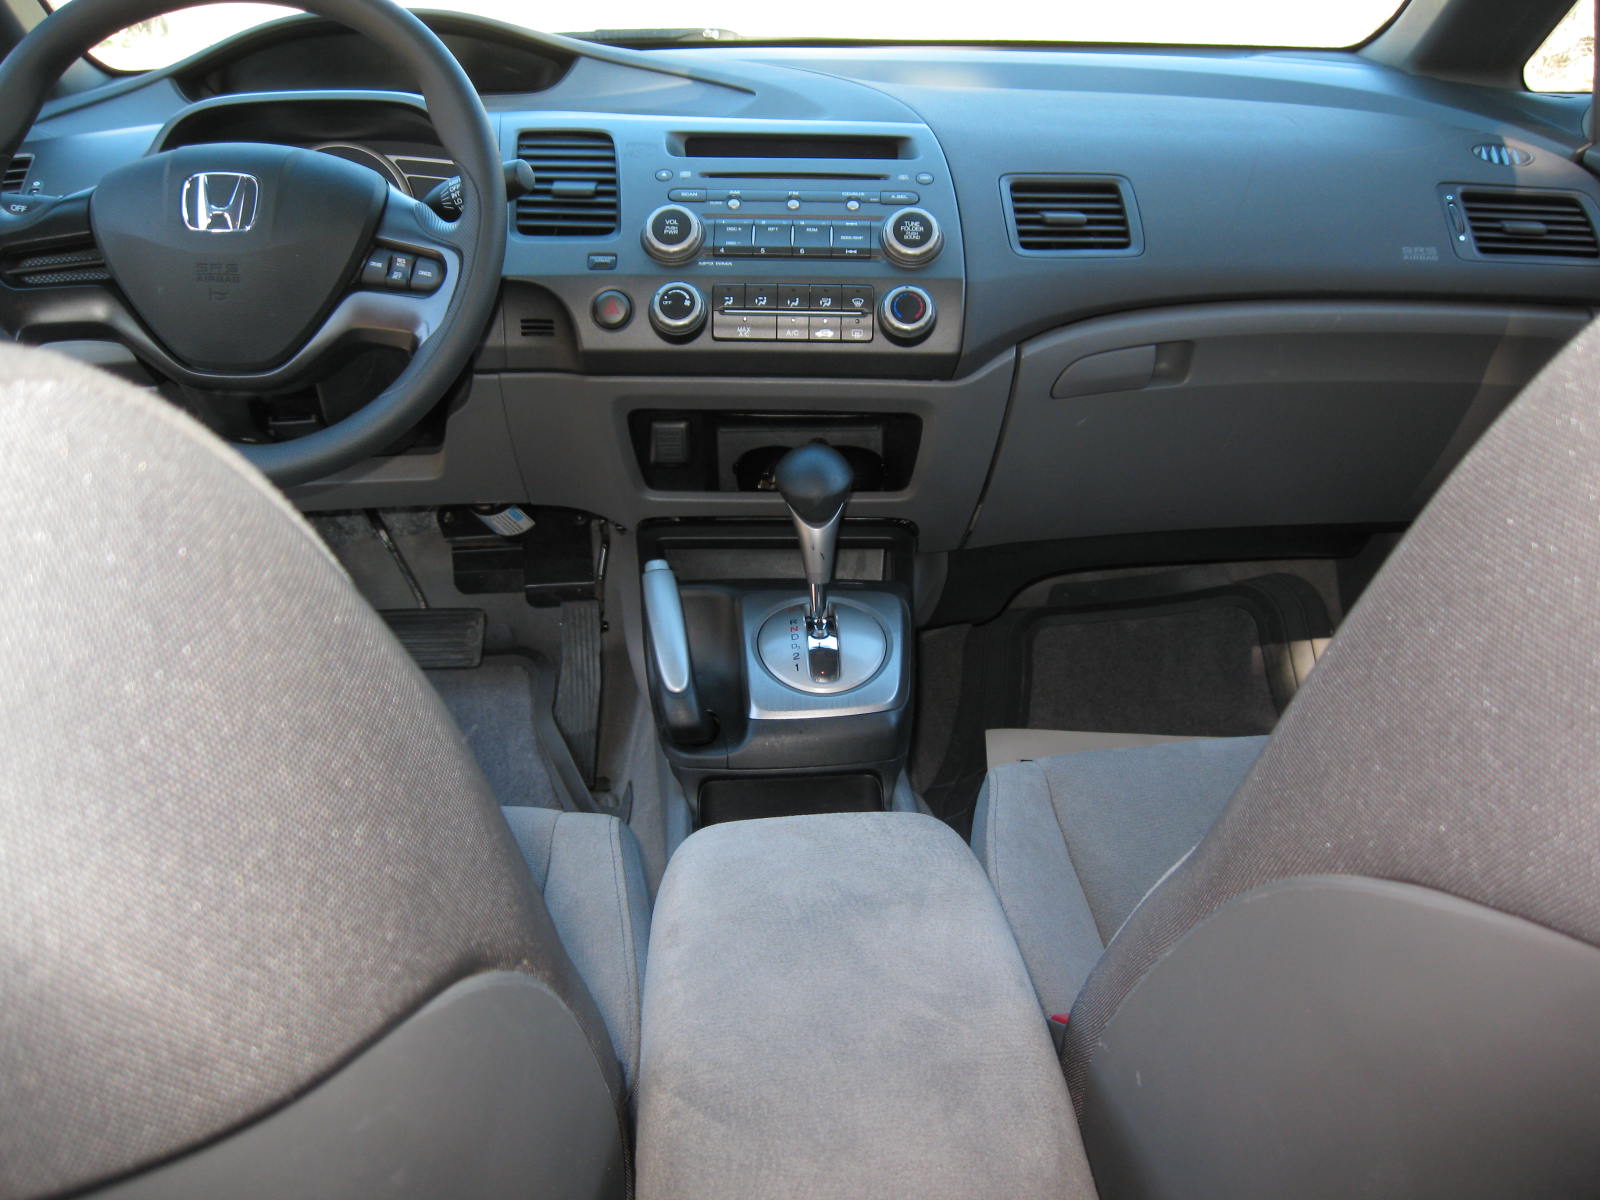 2006 Honda civic lx interior #2